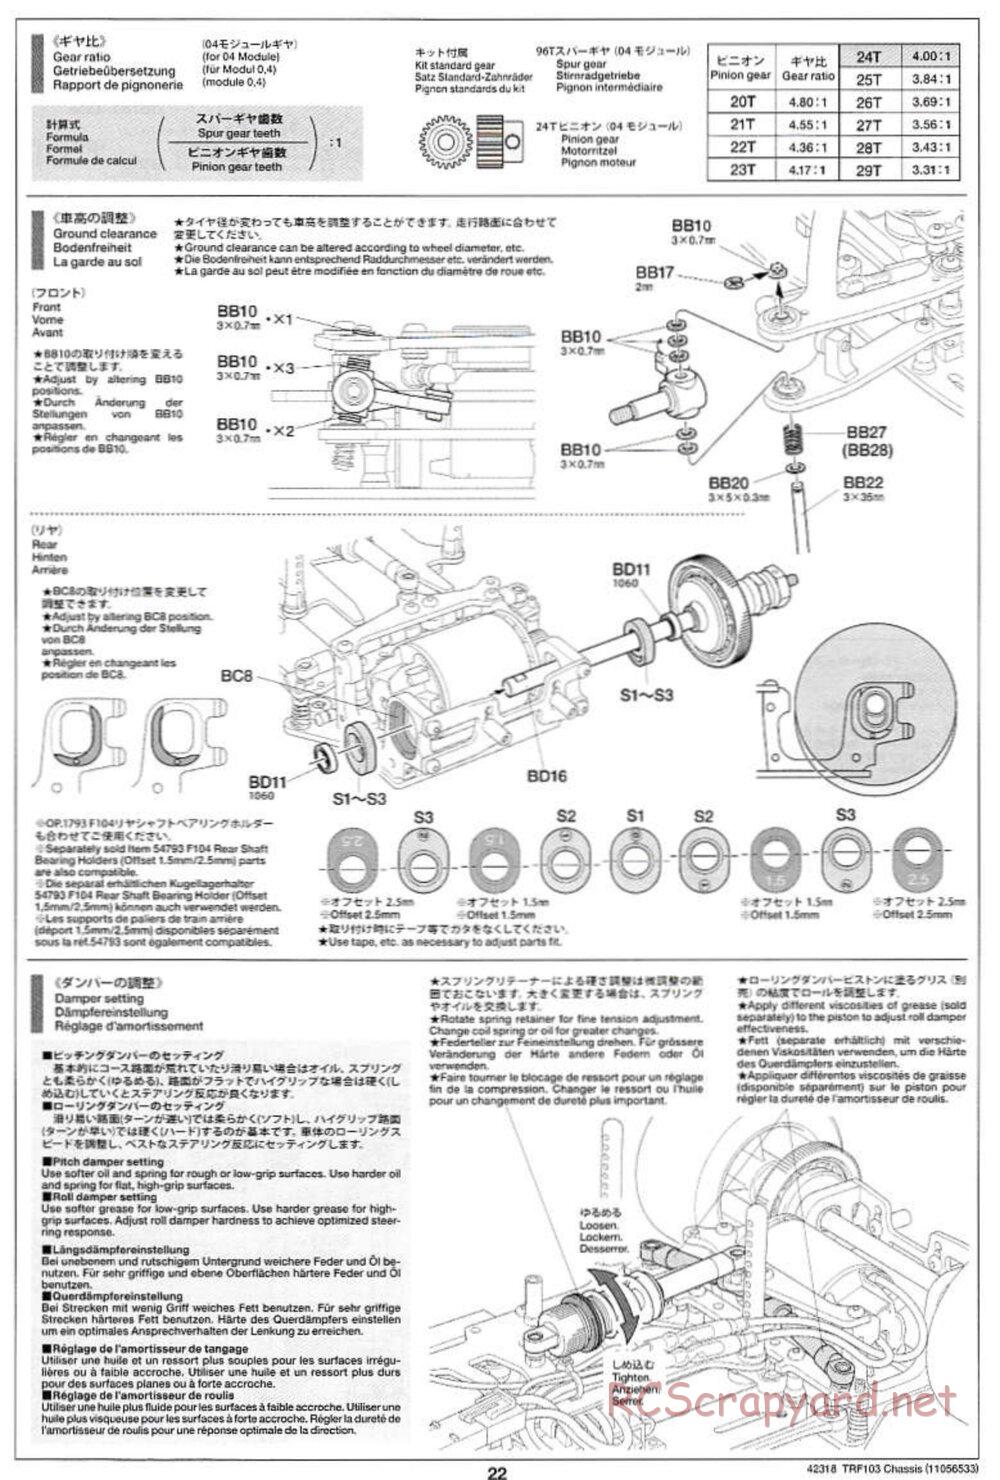 Tamiya - TRF103 Chassis - Manual - Page 22